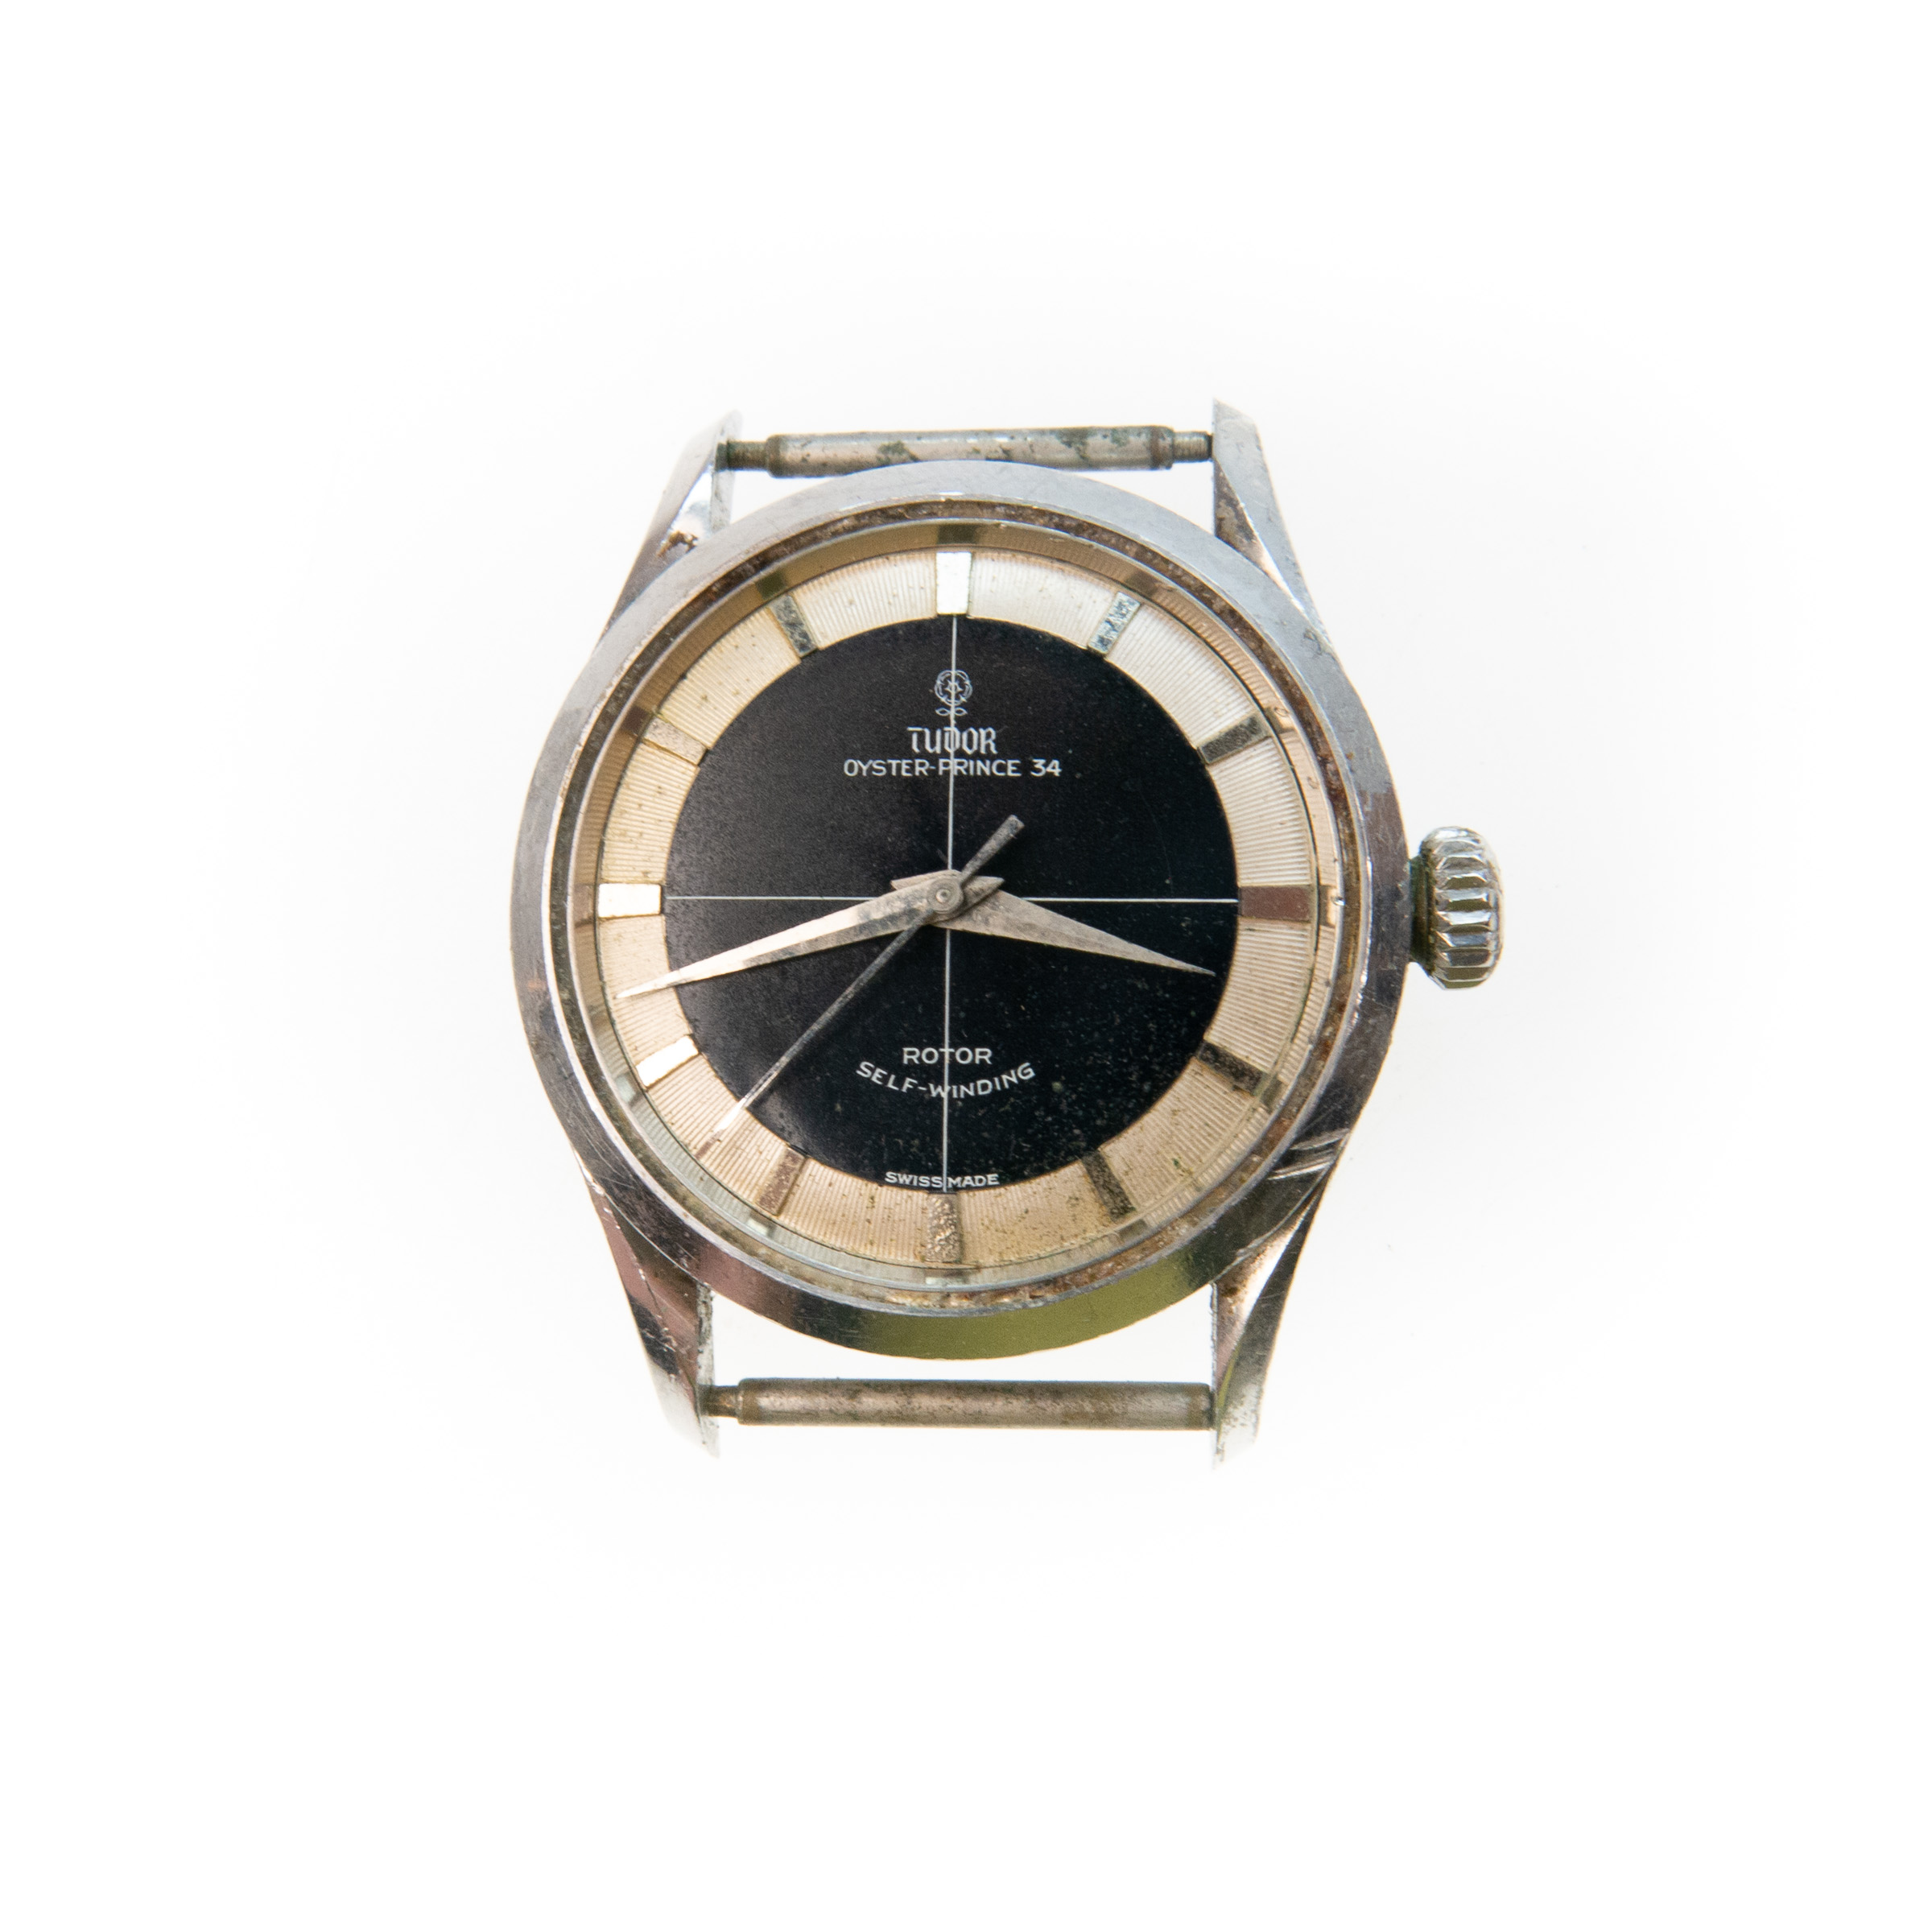 Tudor Oyster Prince 34 Wristwatch